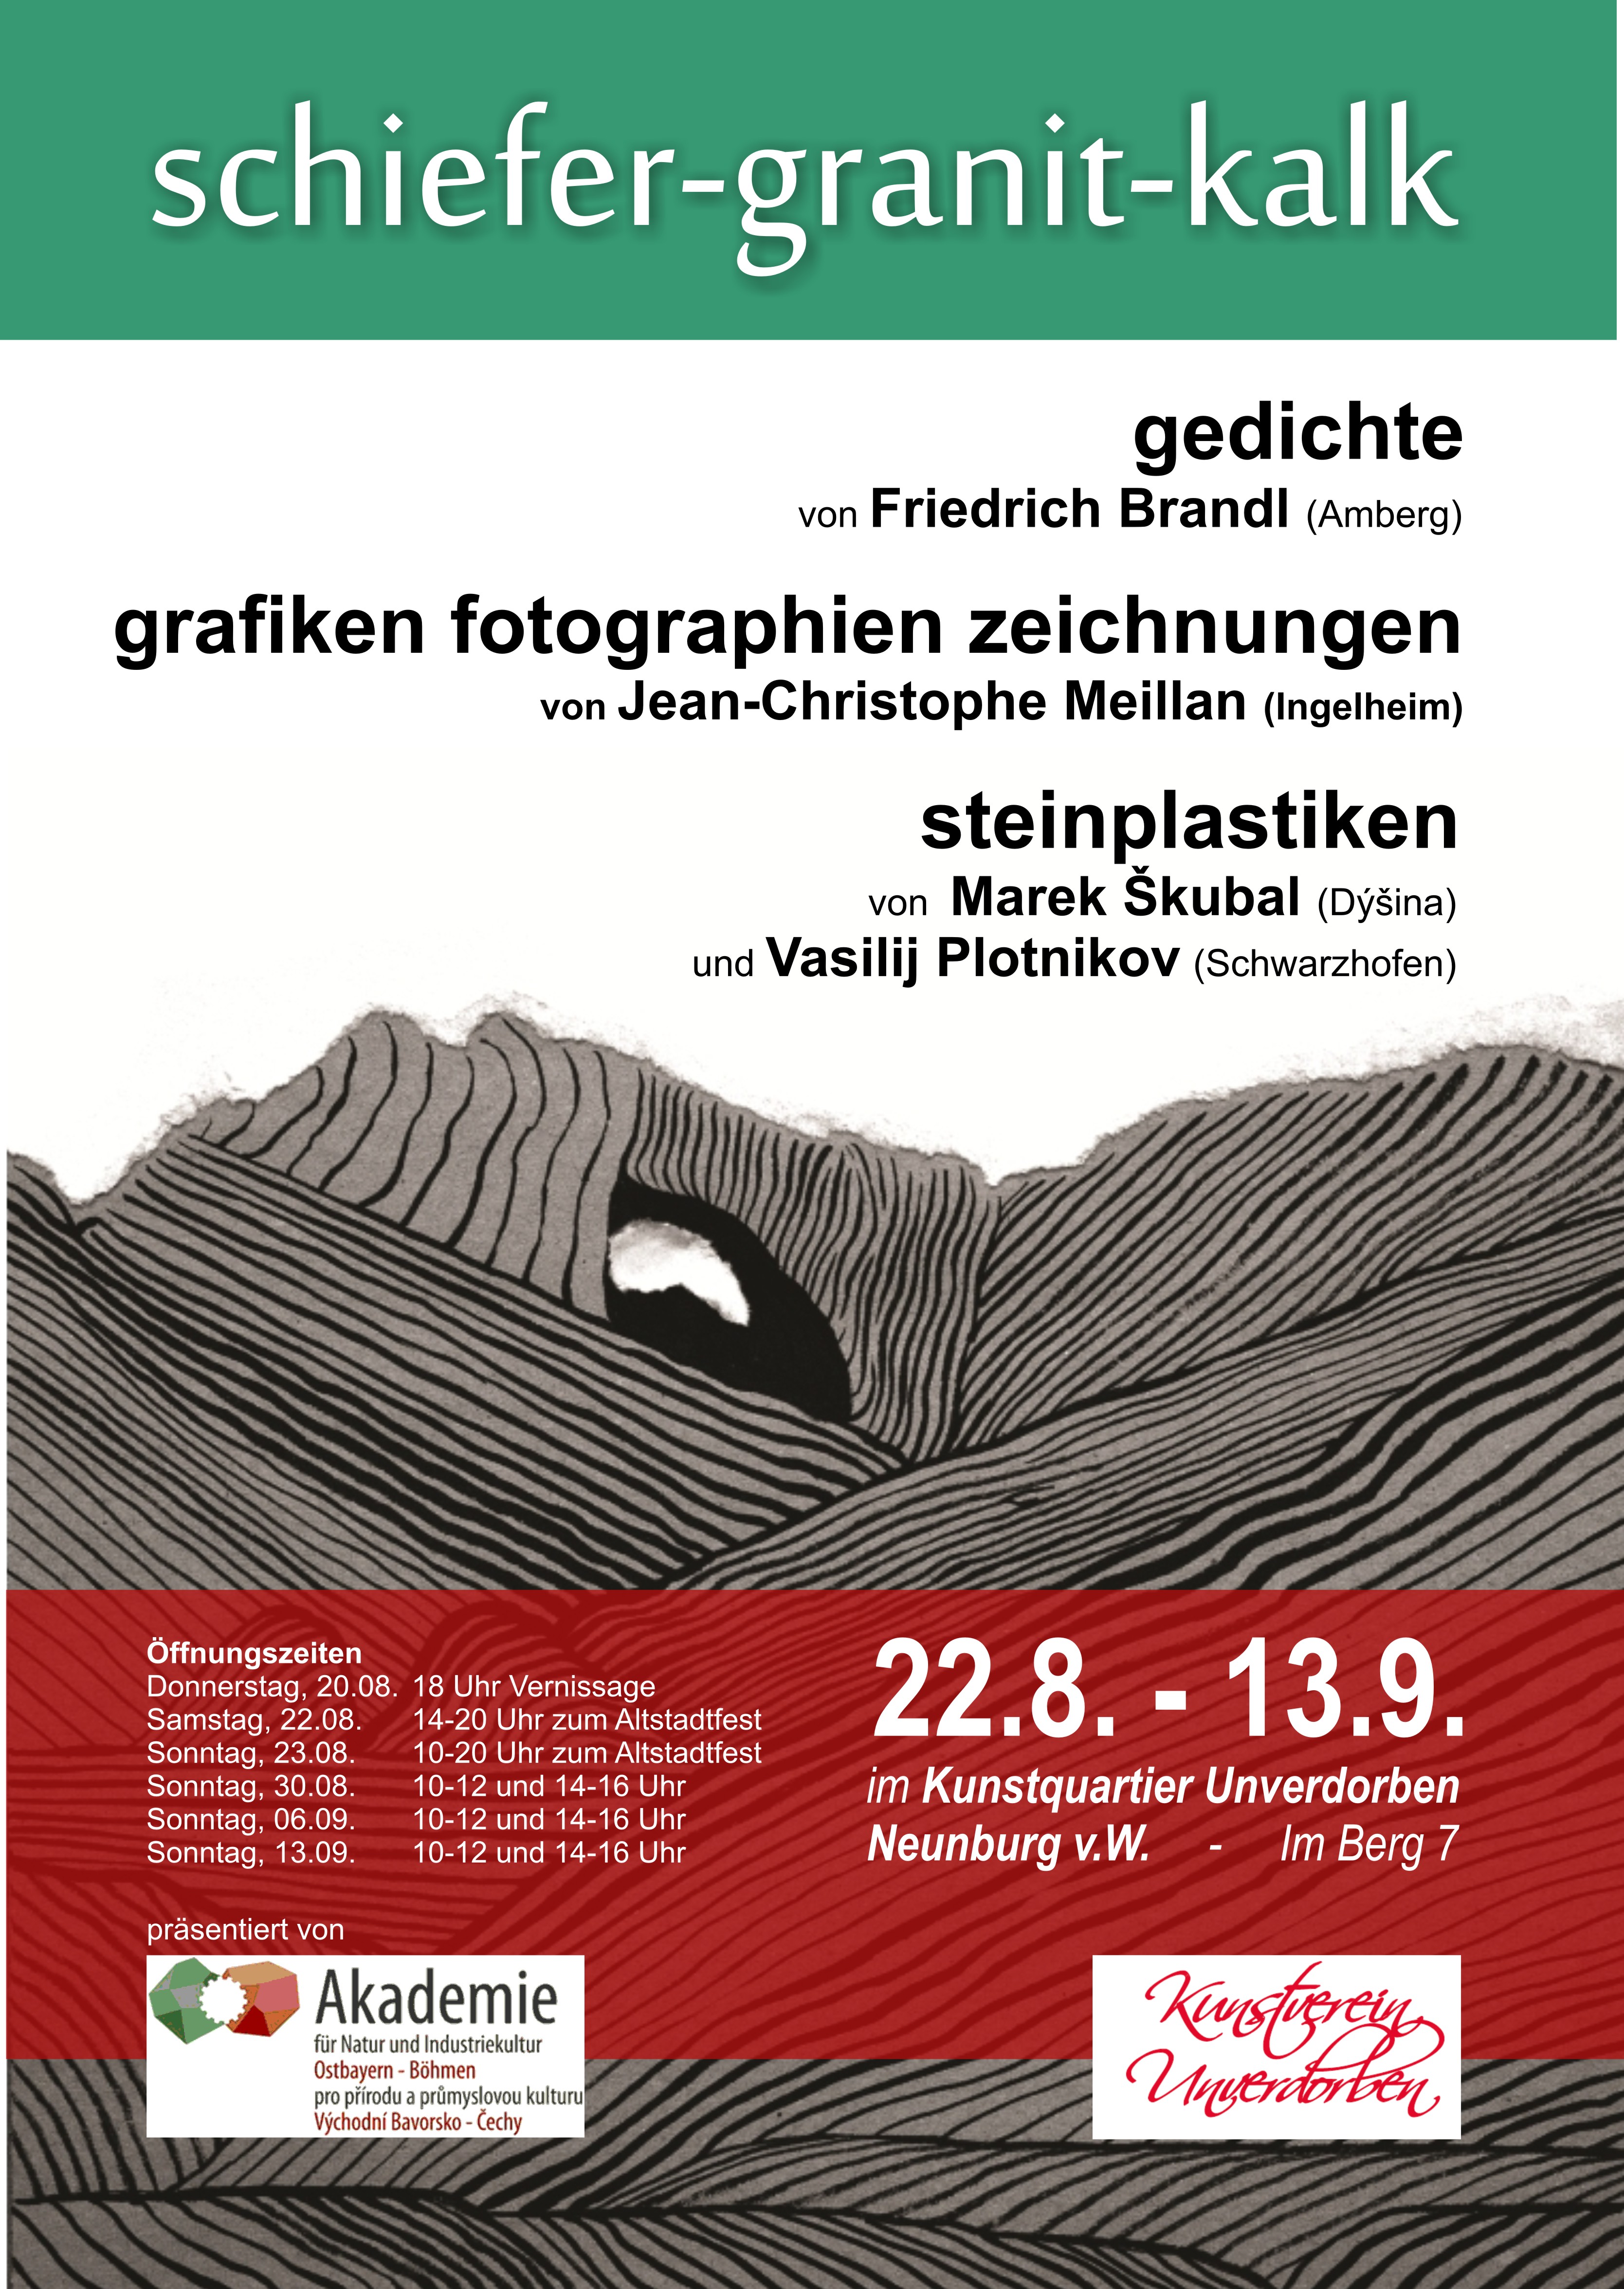 Plakat Schiefer-Granit-Kalk NEN 2015